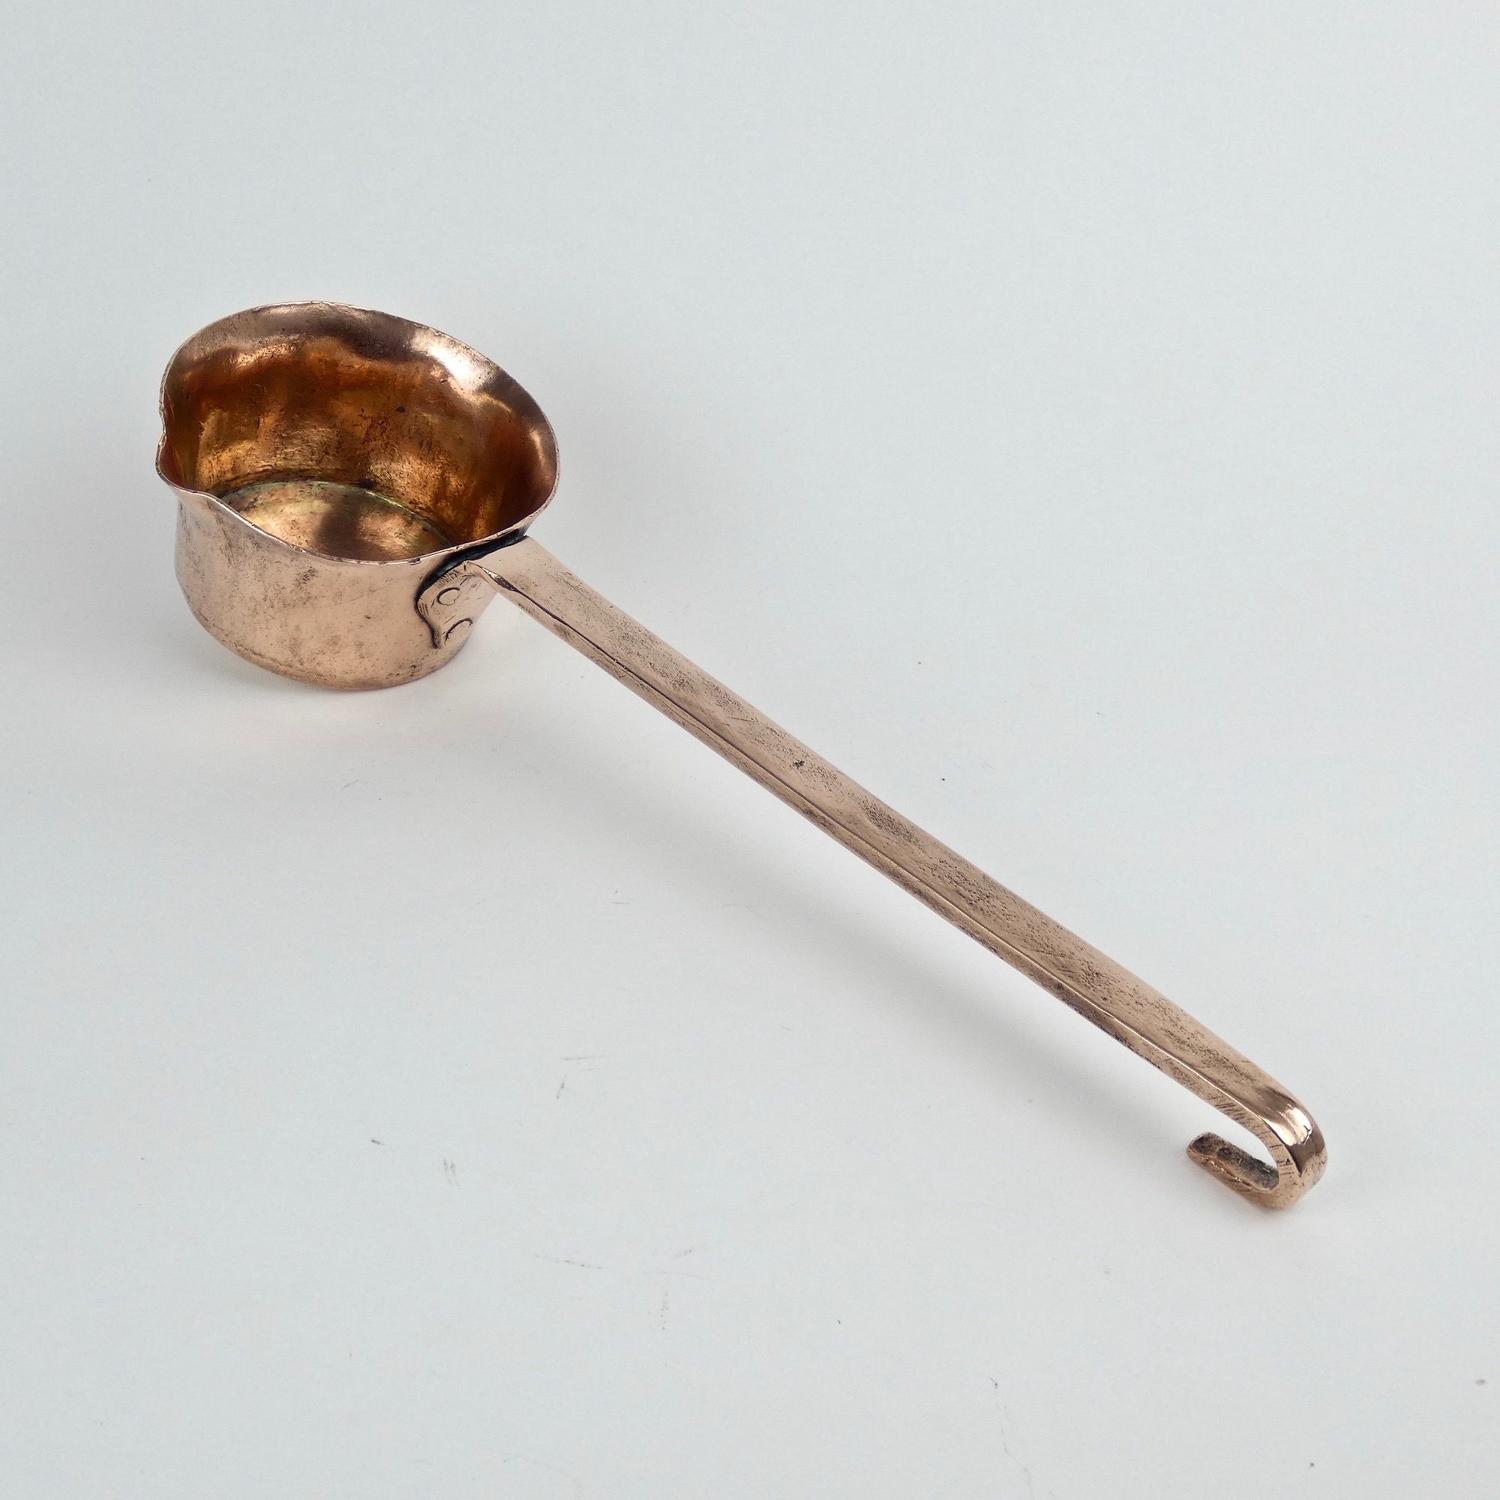 19th century copper ladle